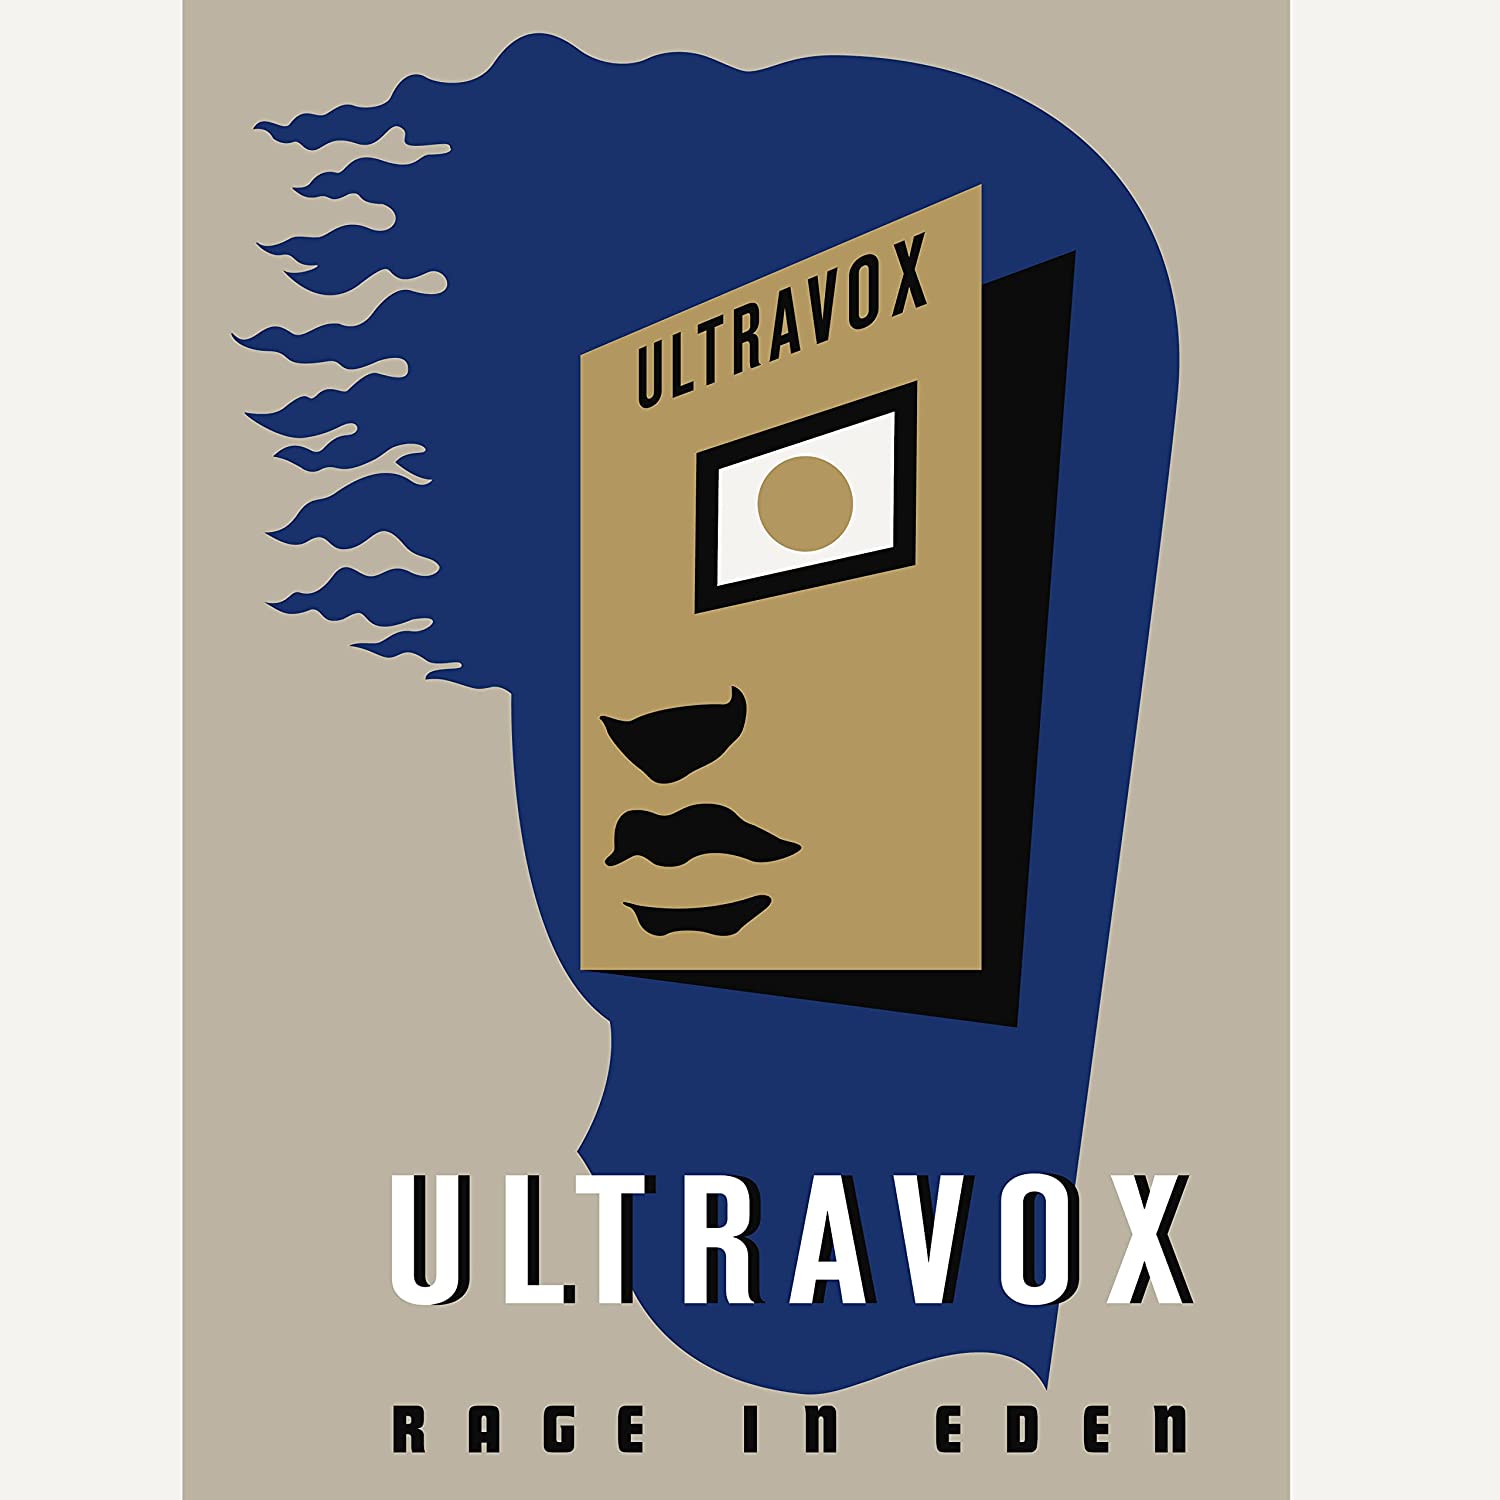 Ultravox albums – 